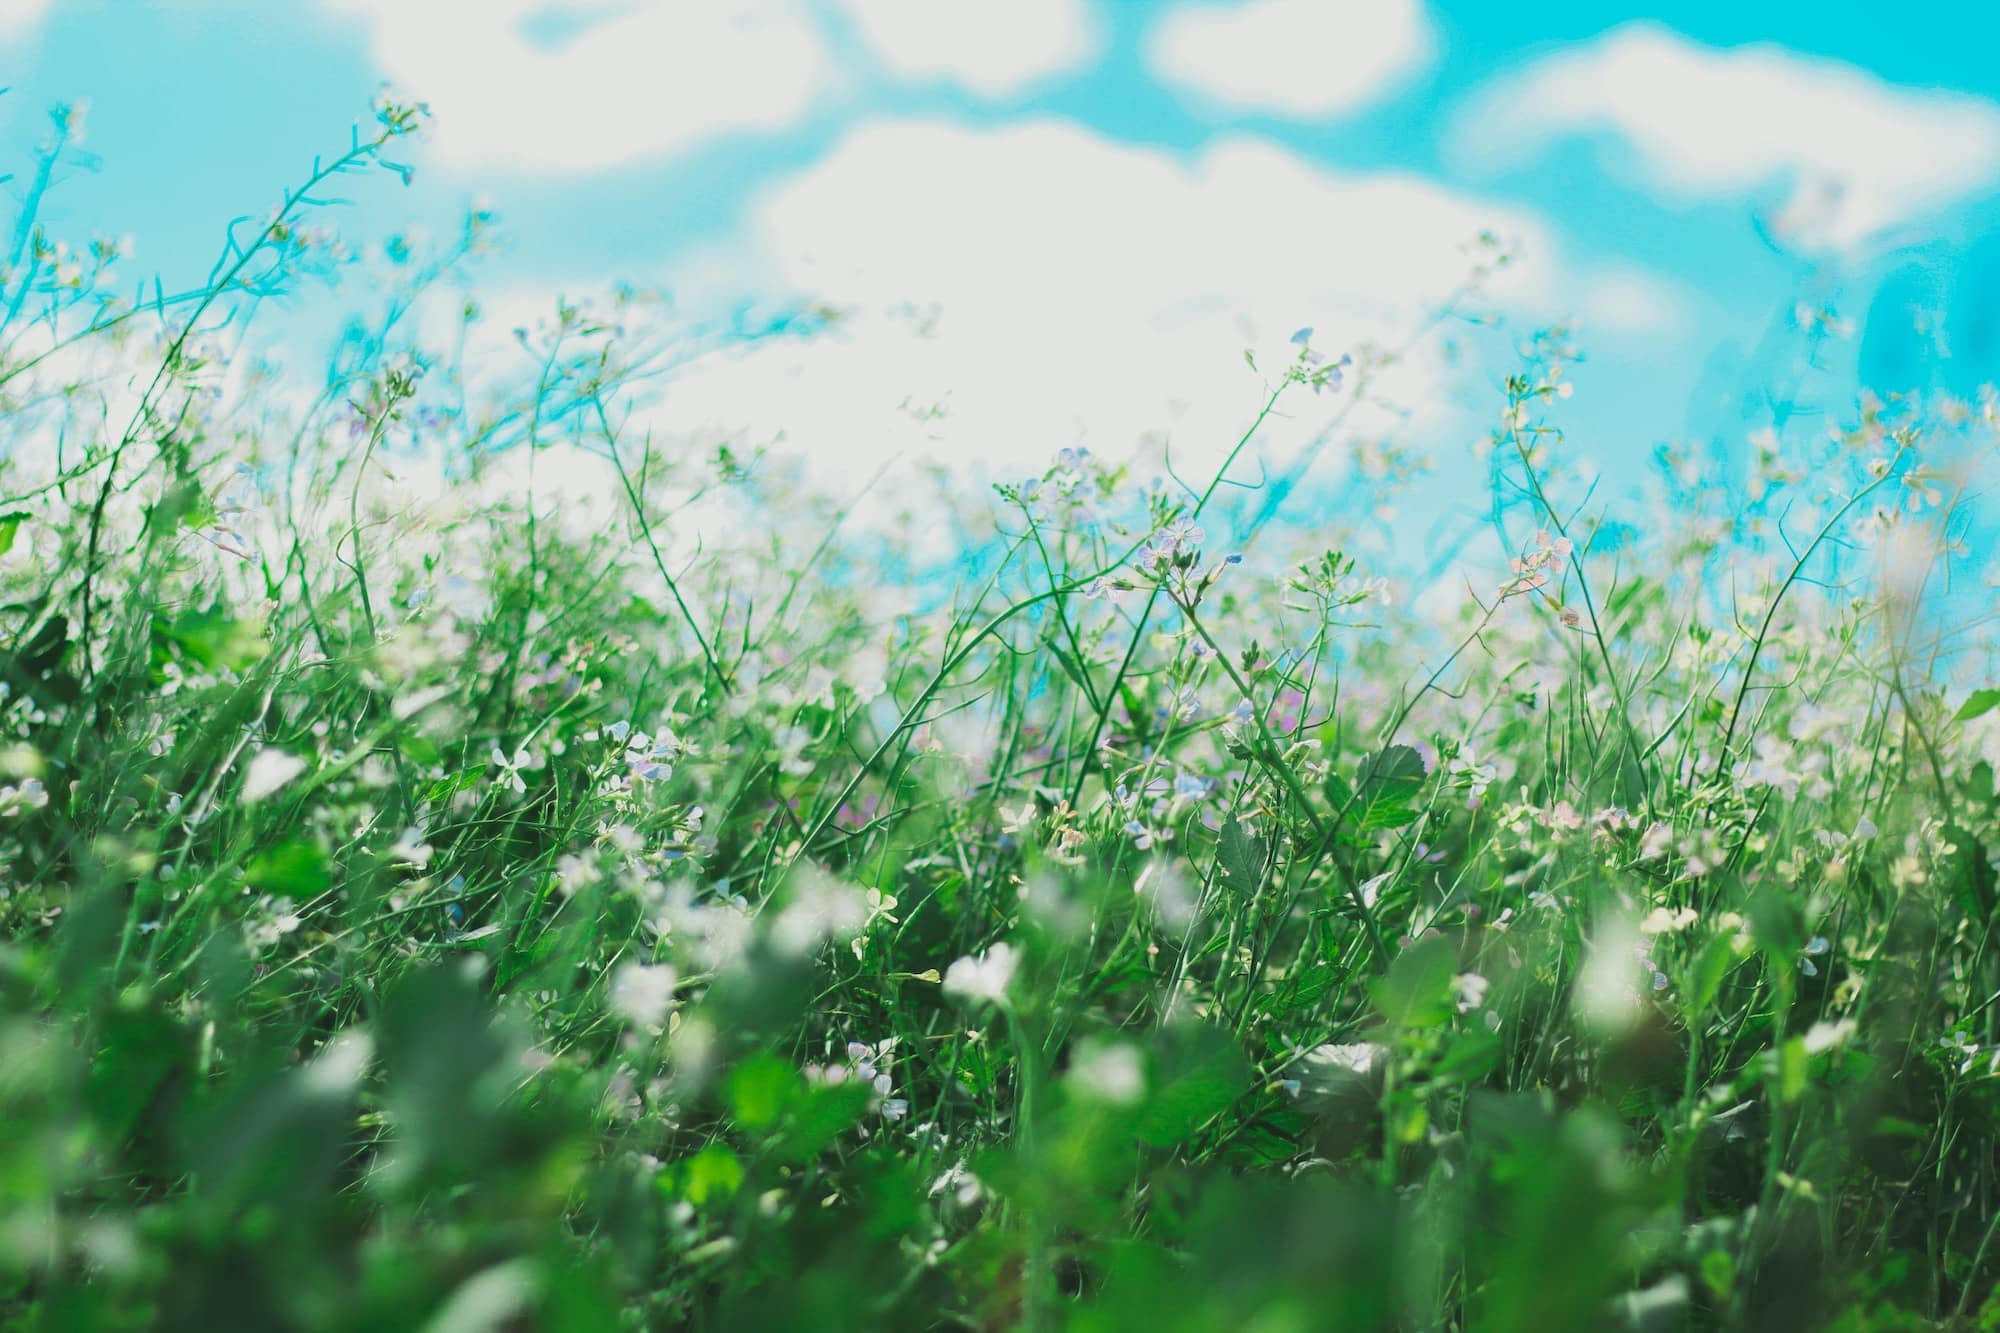 seasonal allergies - flowers in a field - high pollen count